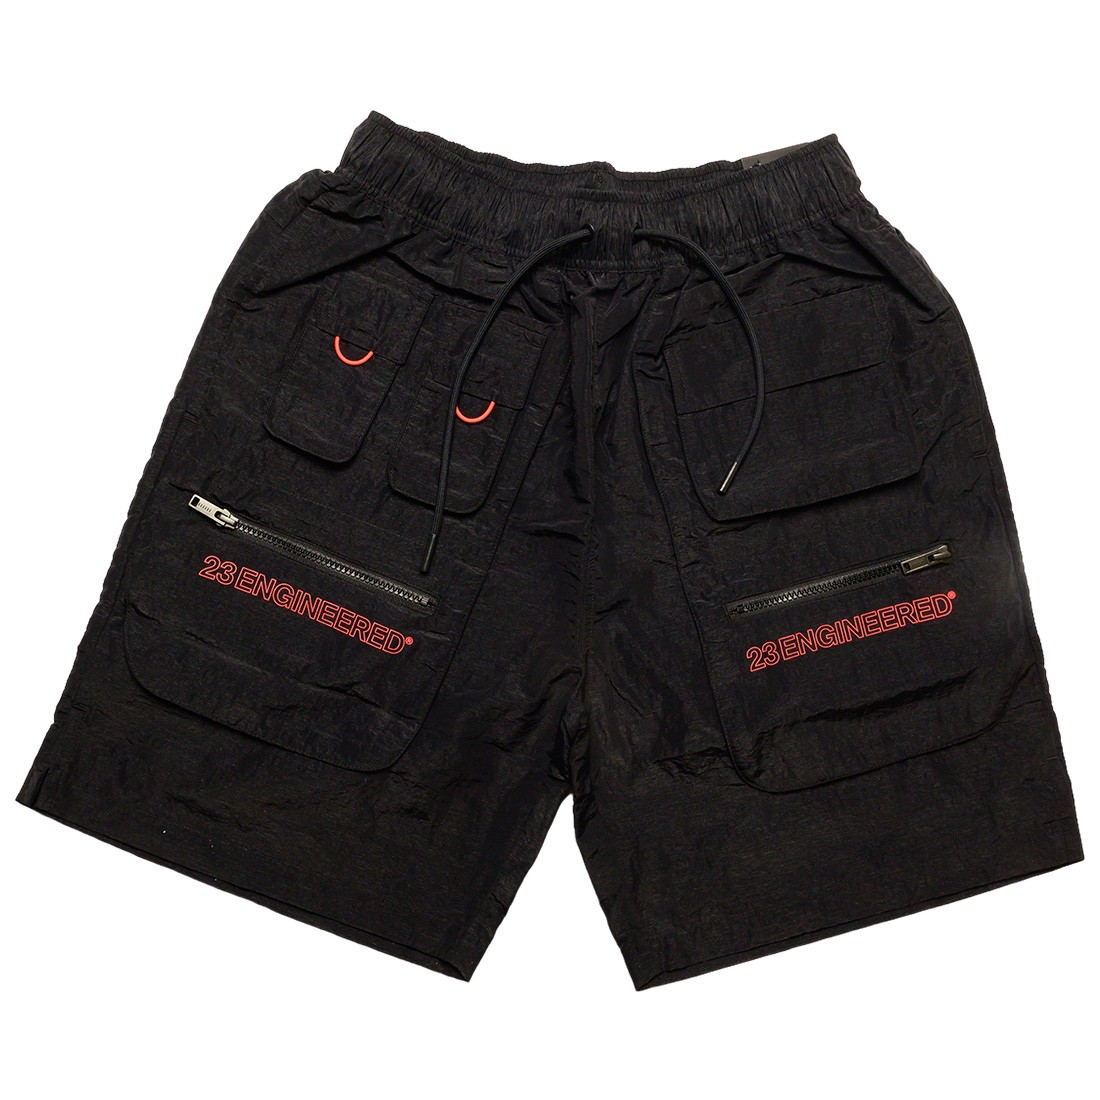 infrared jordan shorts